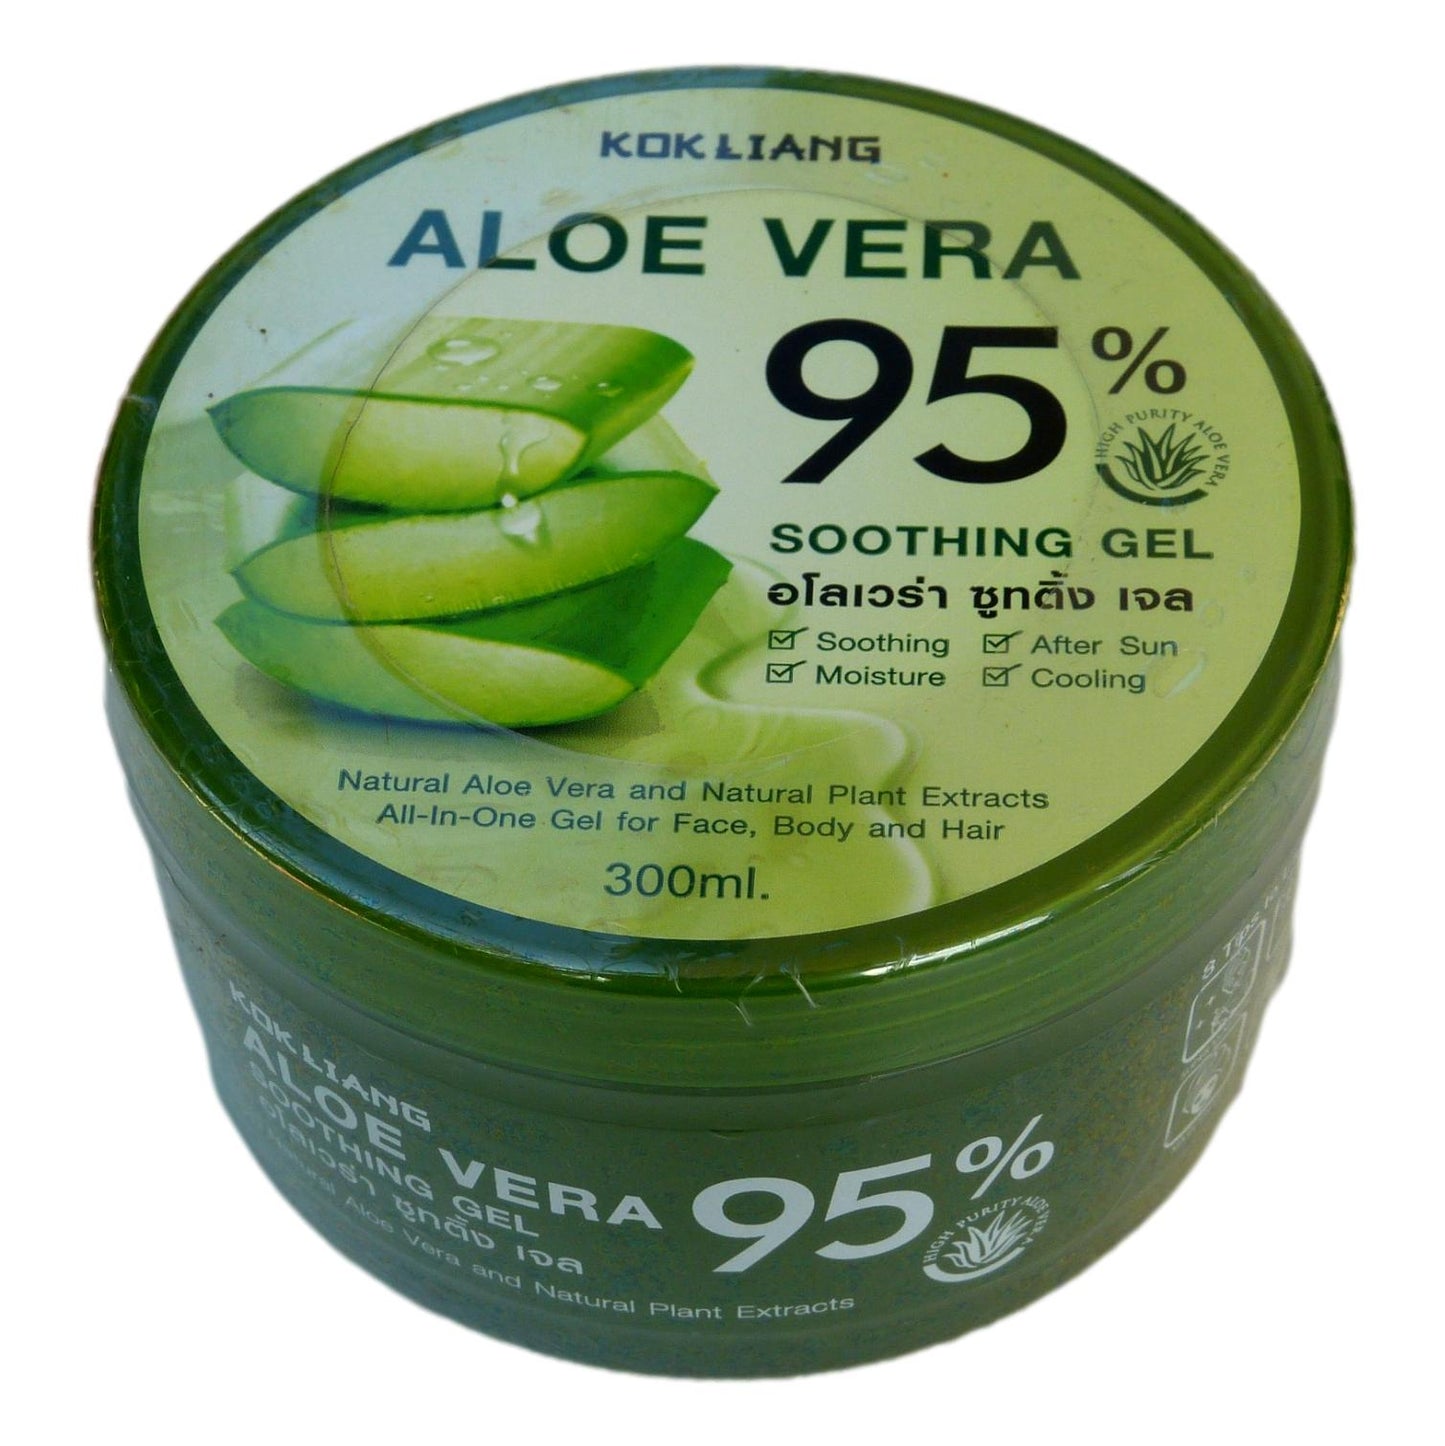 Kok Liang Aloe Vera Soothing Gel 95% 300ml - Asian Beauty Supply